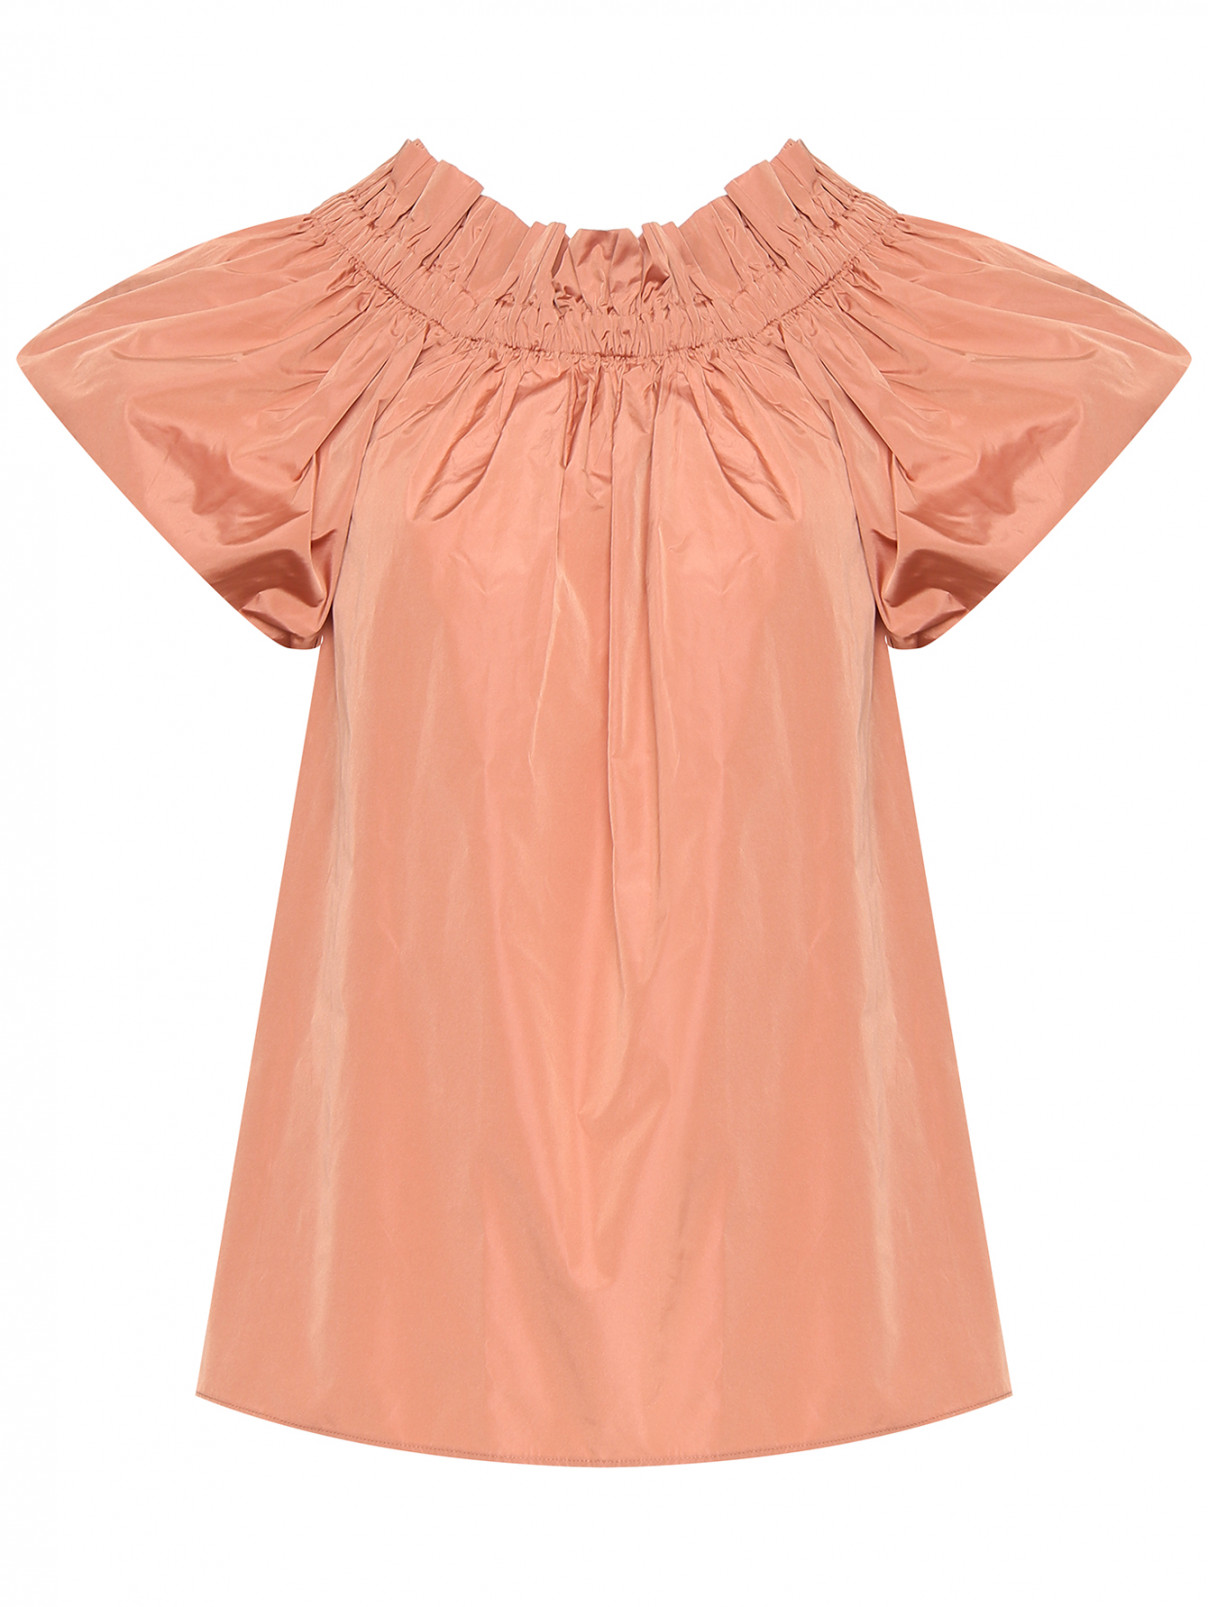 Блуза с рукавами-буфами Max Mara  –  Общий вид  – Цвет:  Розовый